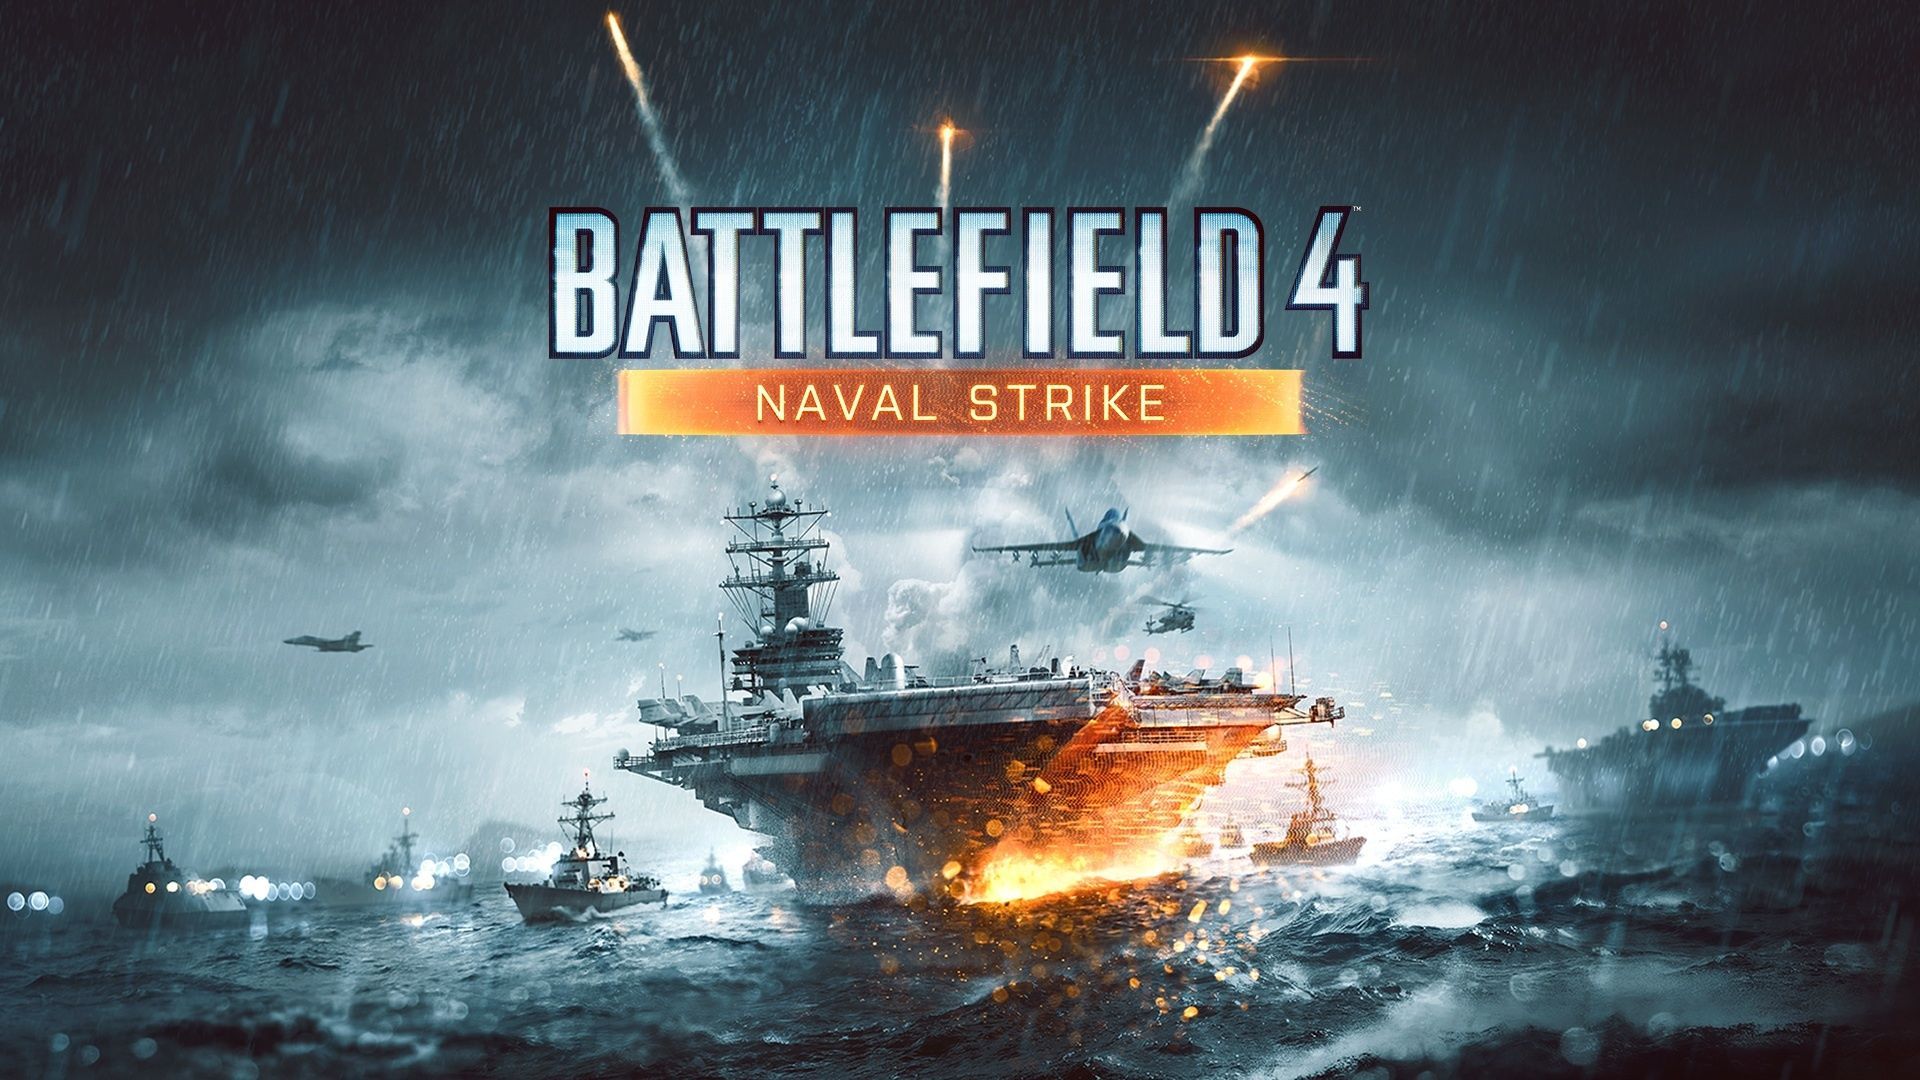 Battlefield 4 Naval Strike Wallpapers | HD Wallpapers